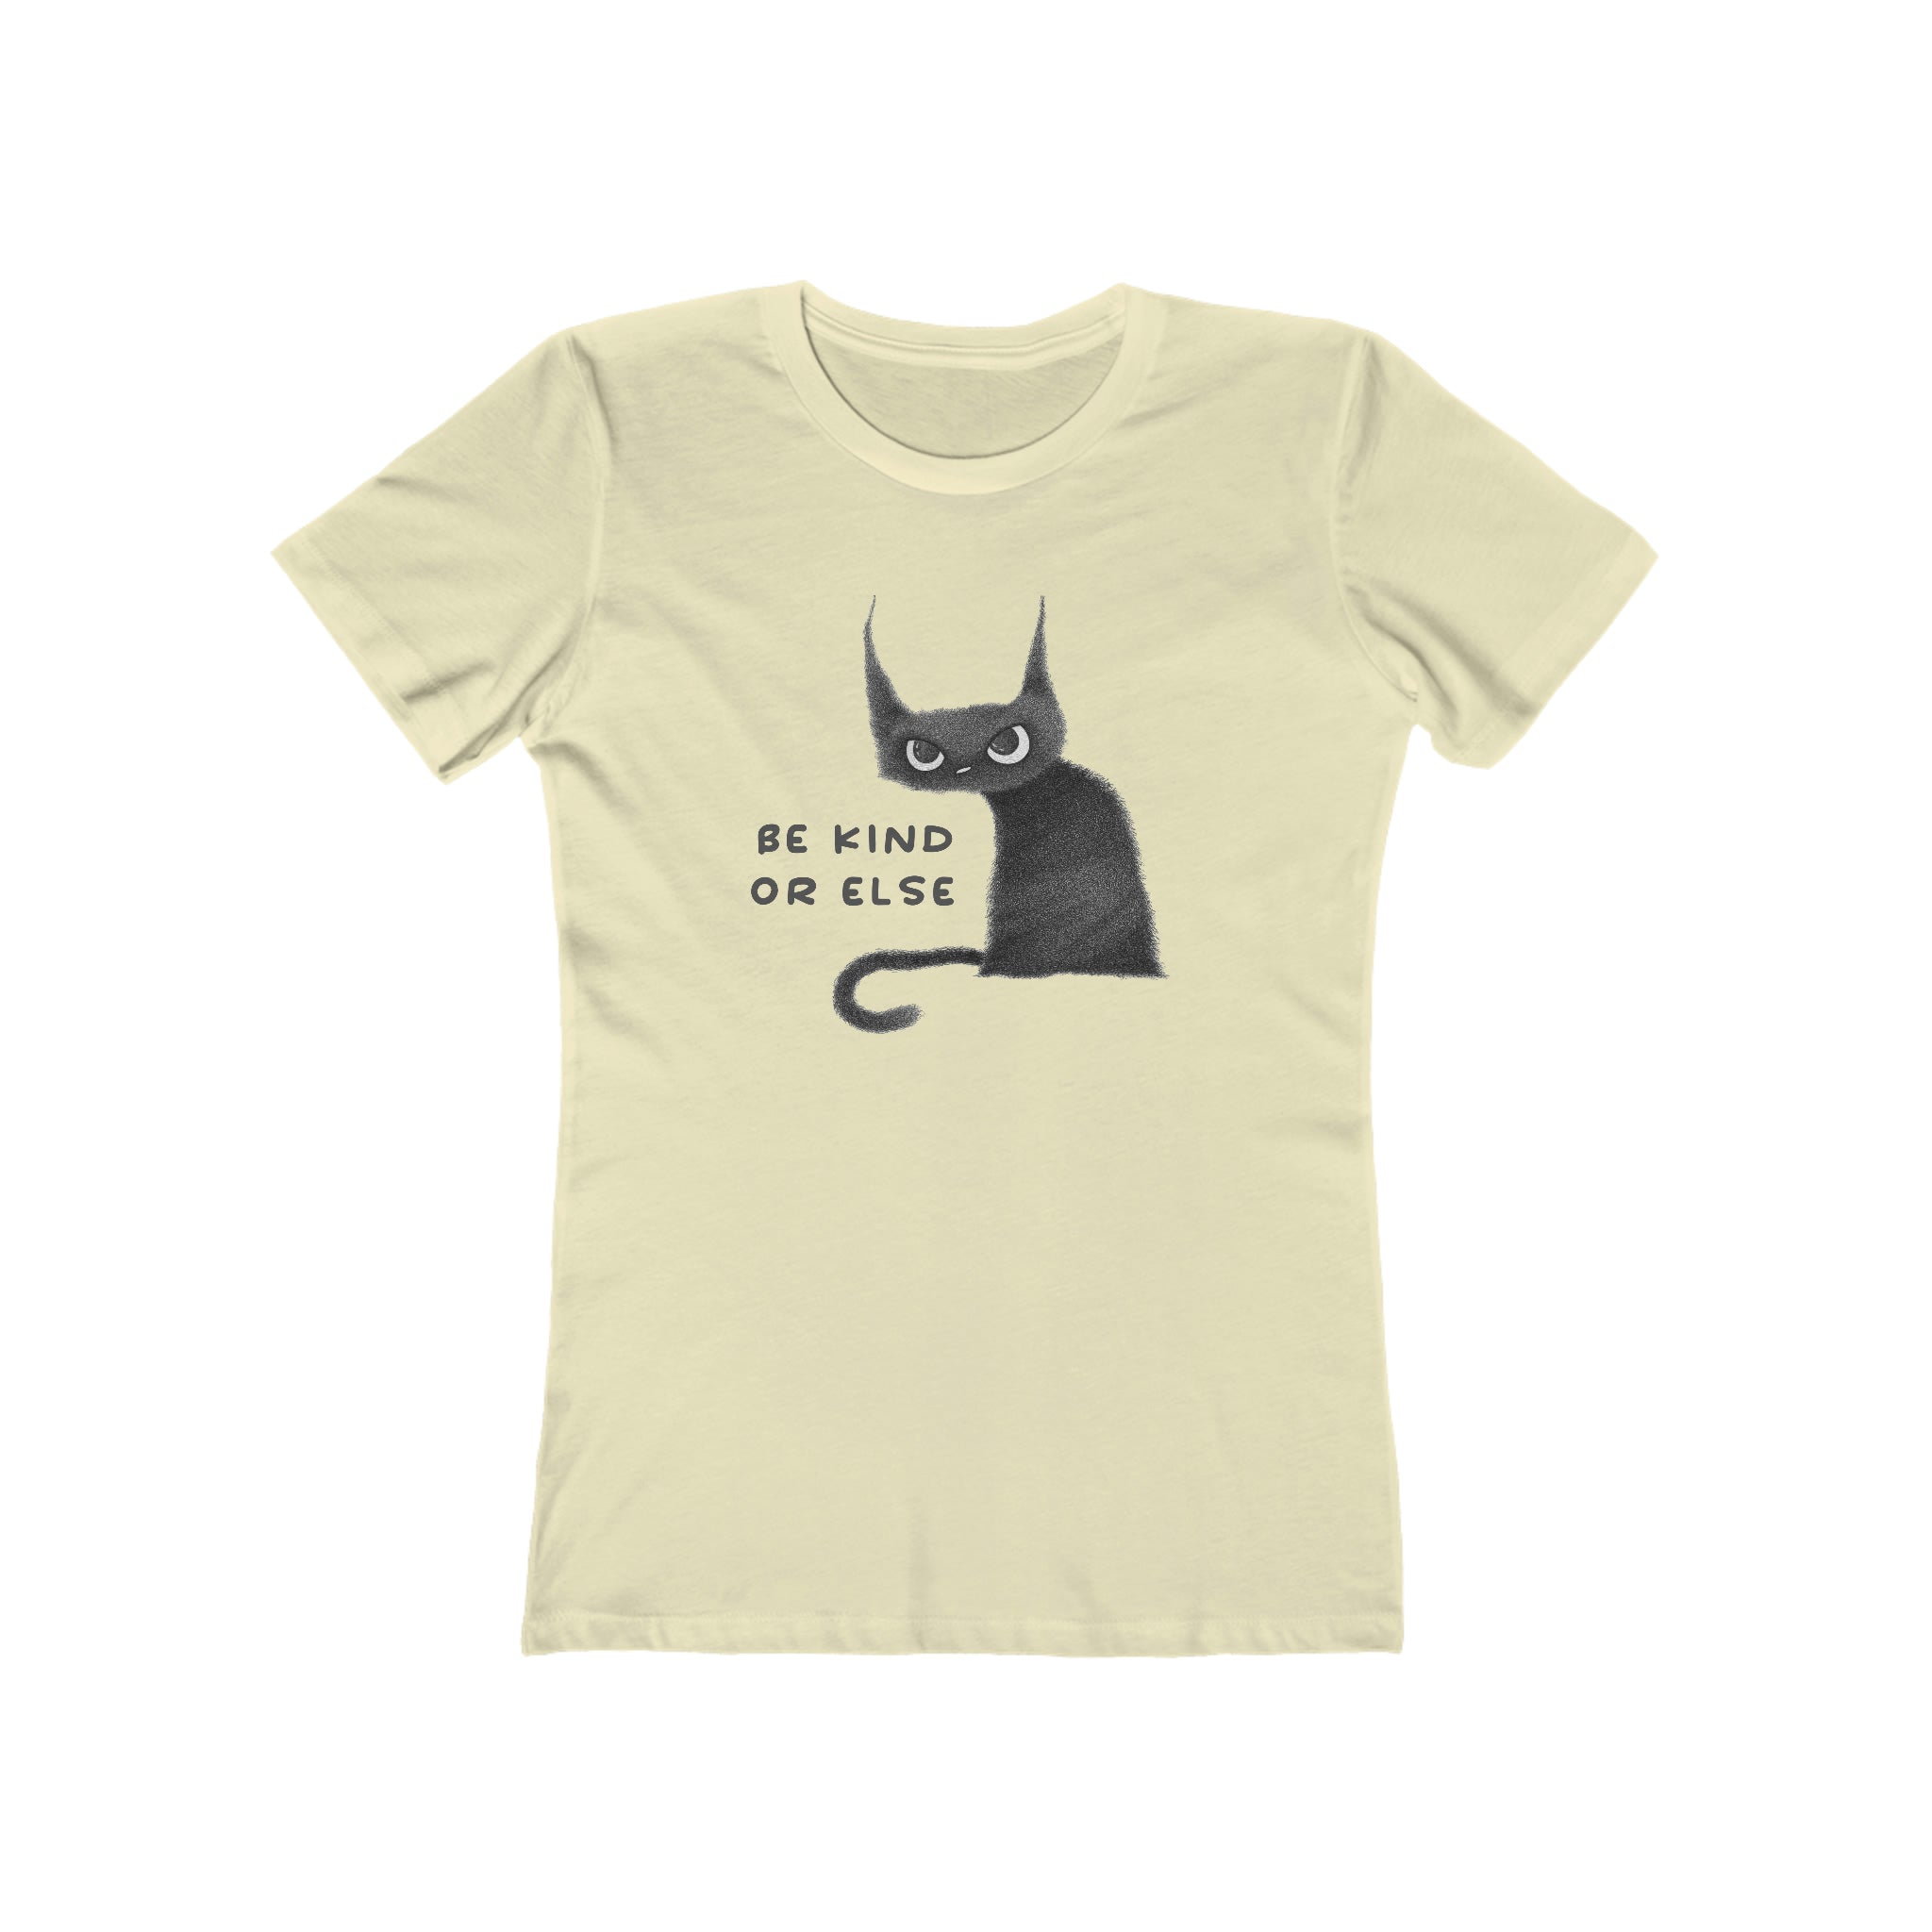 Be Kind Or Else : Women's 100% Cotton T-Shirt